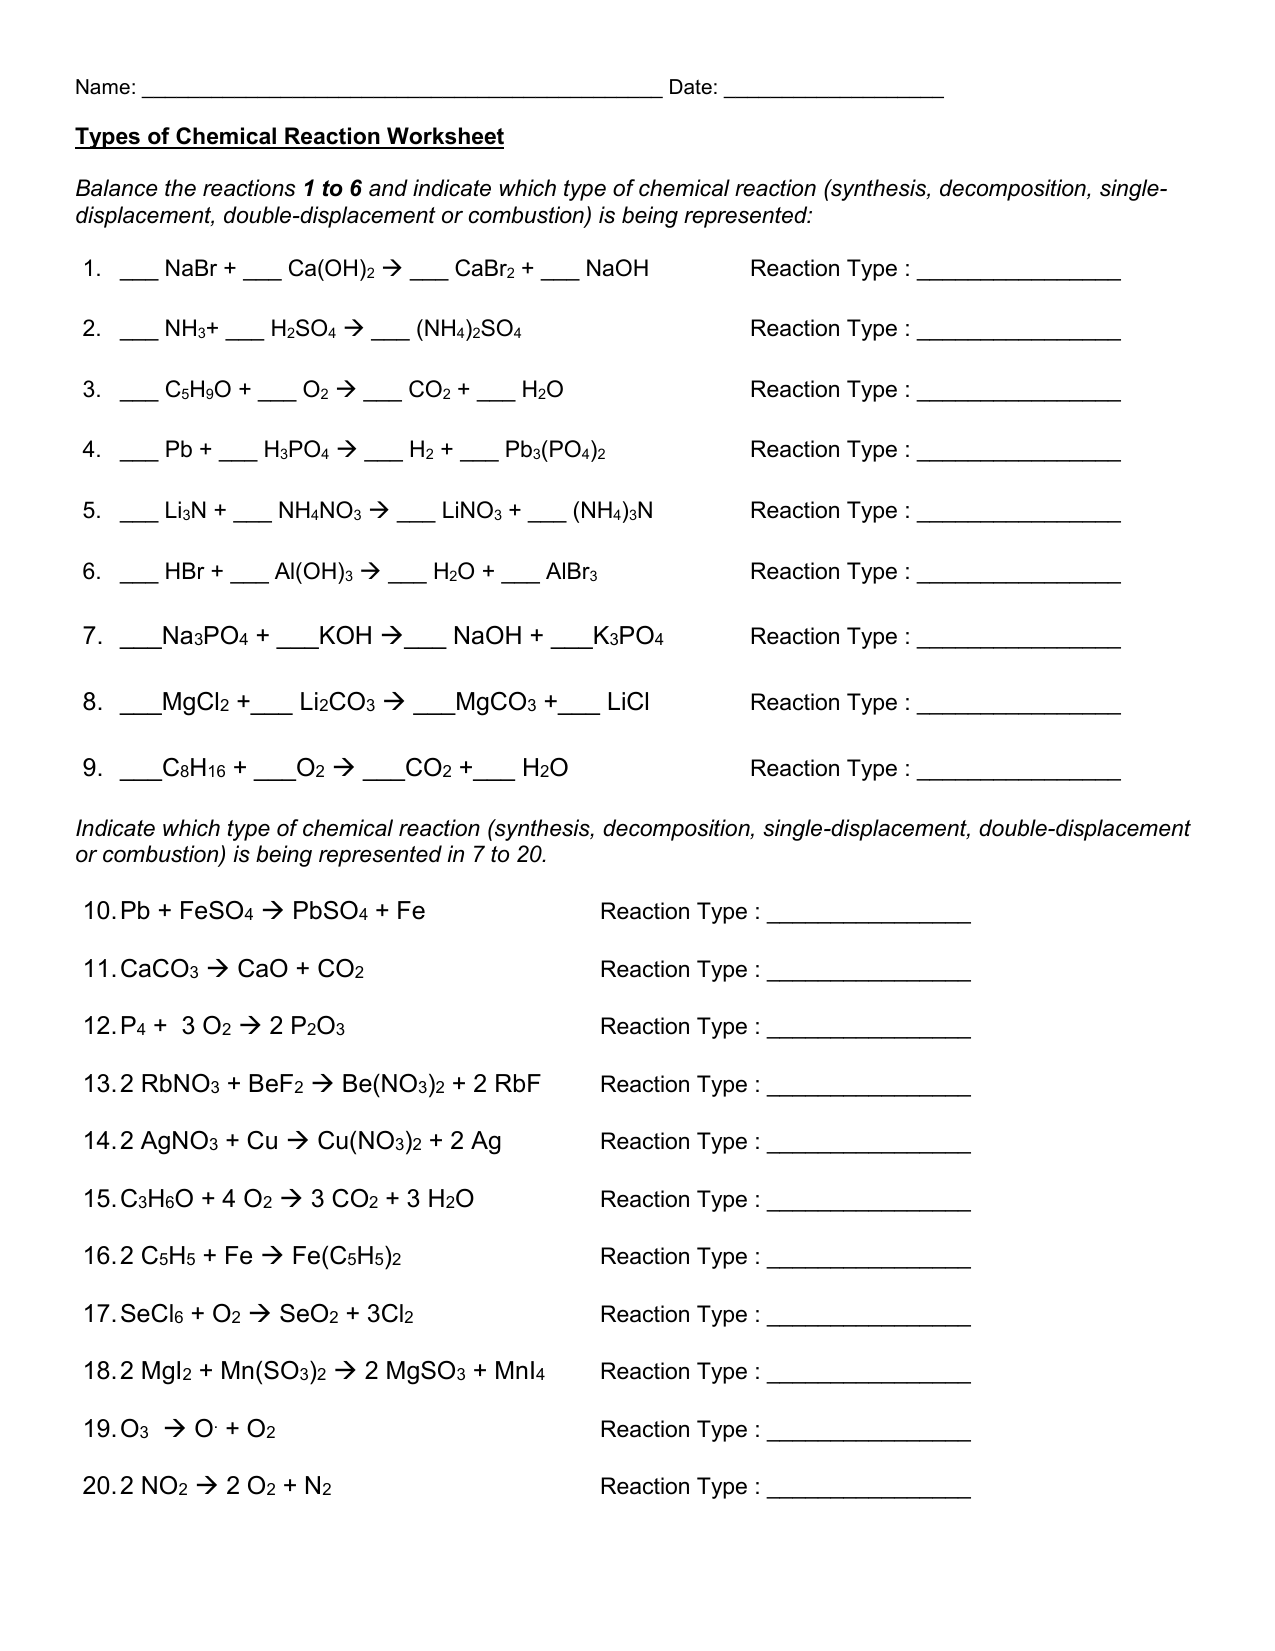 Types of Chemical Reaction Worksheet Inside Chemical Reactions Types Worksheet